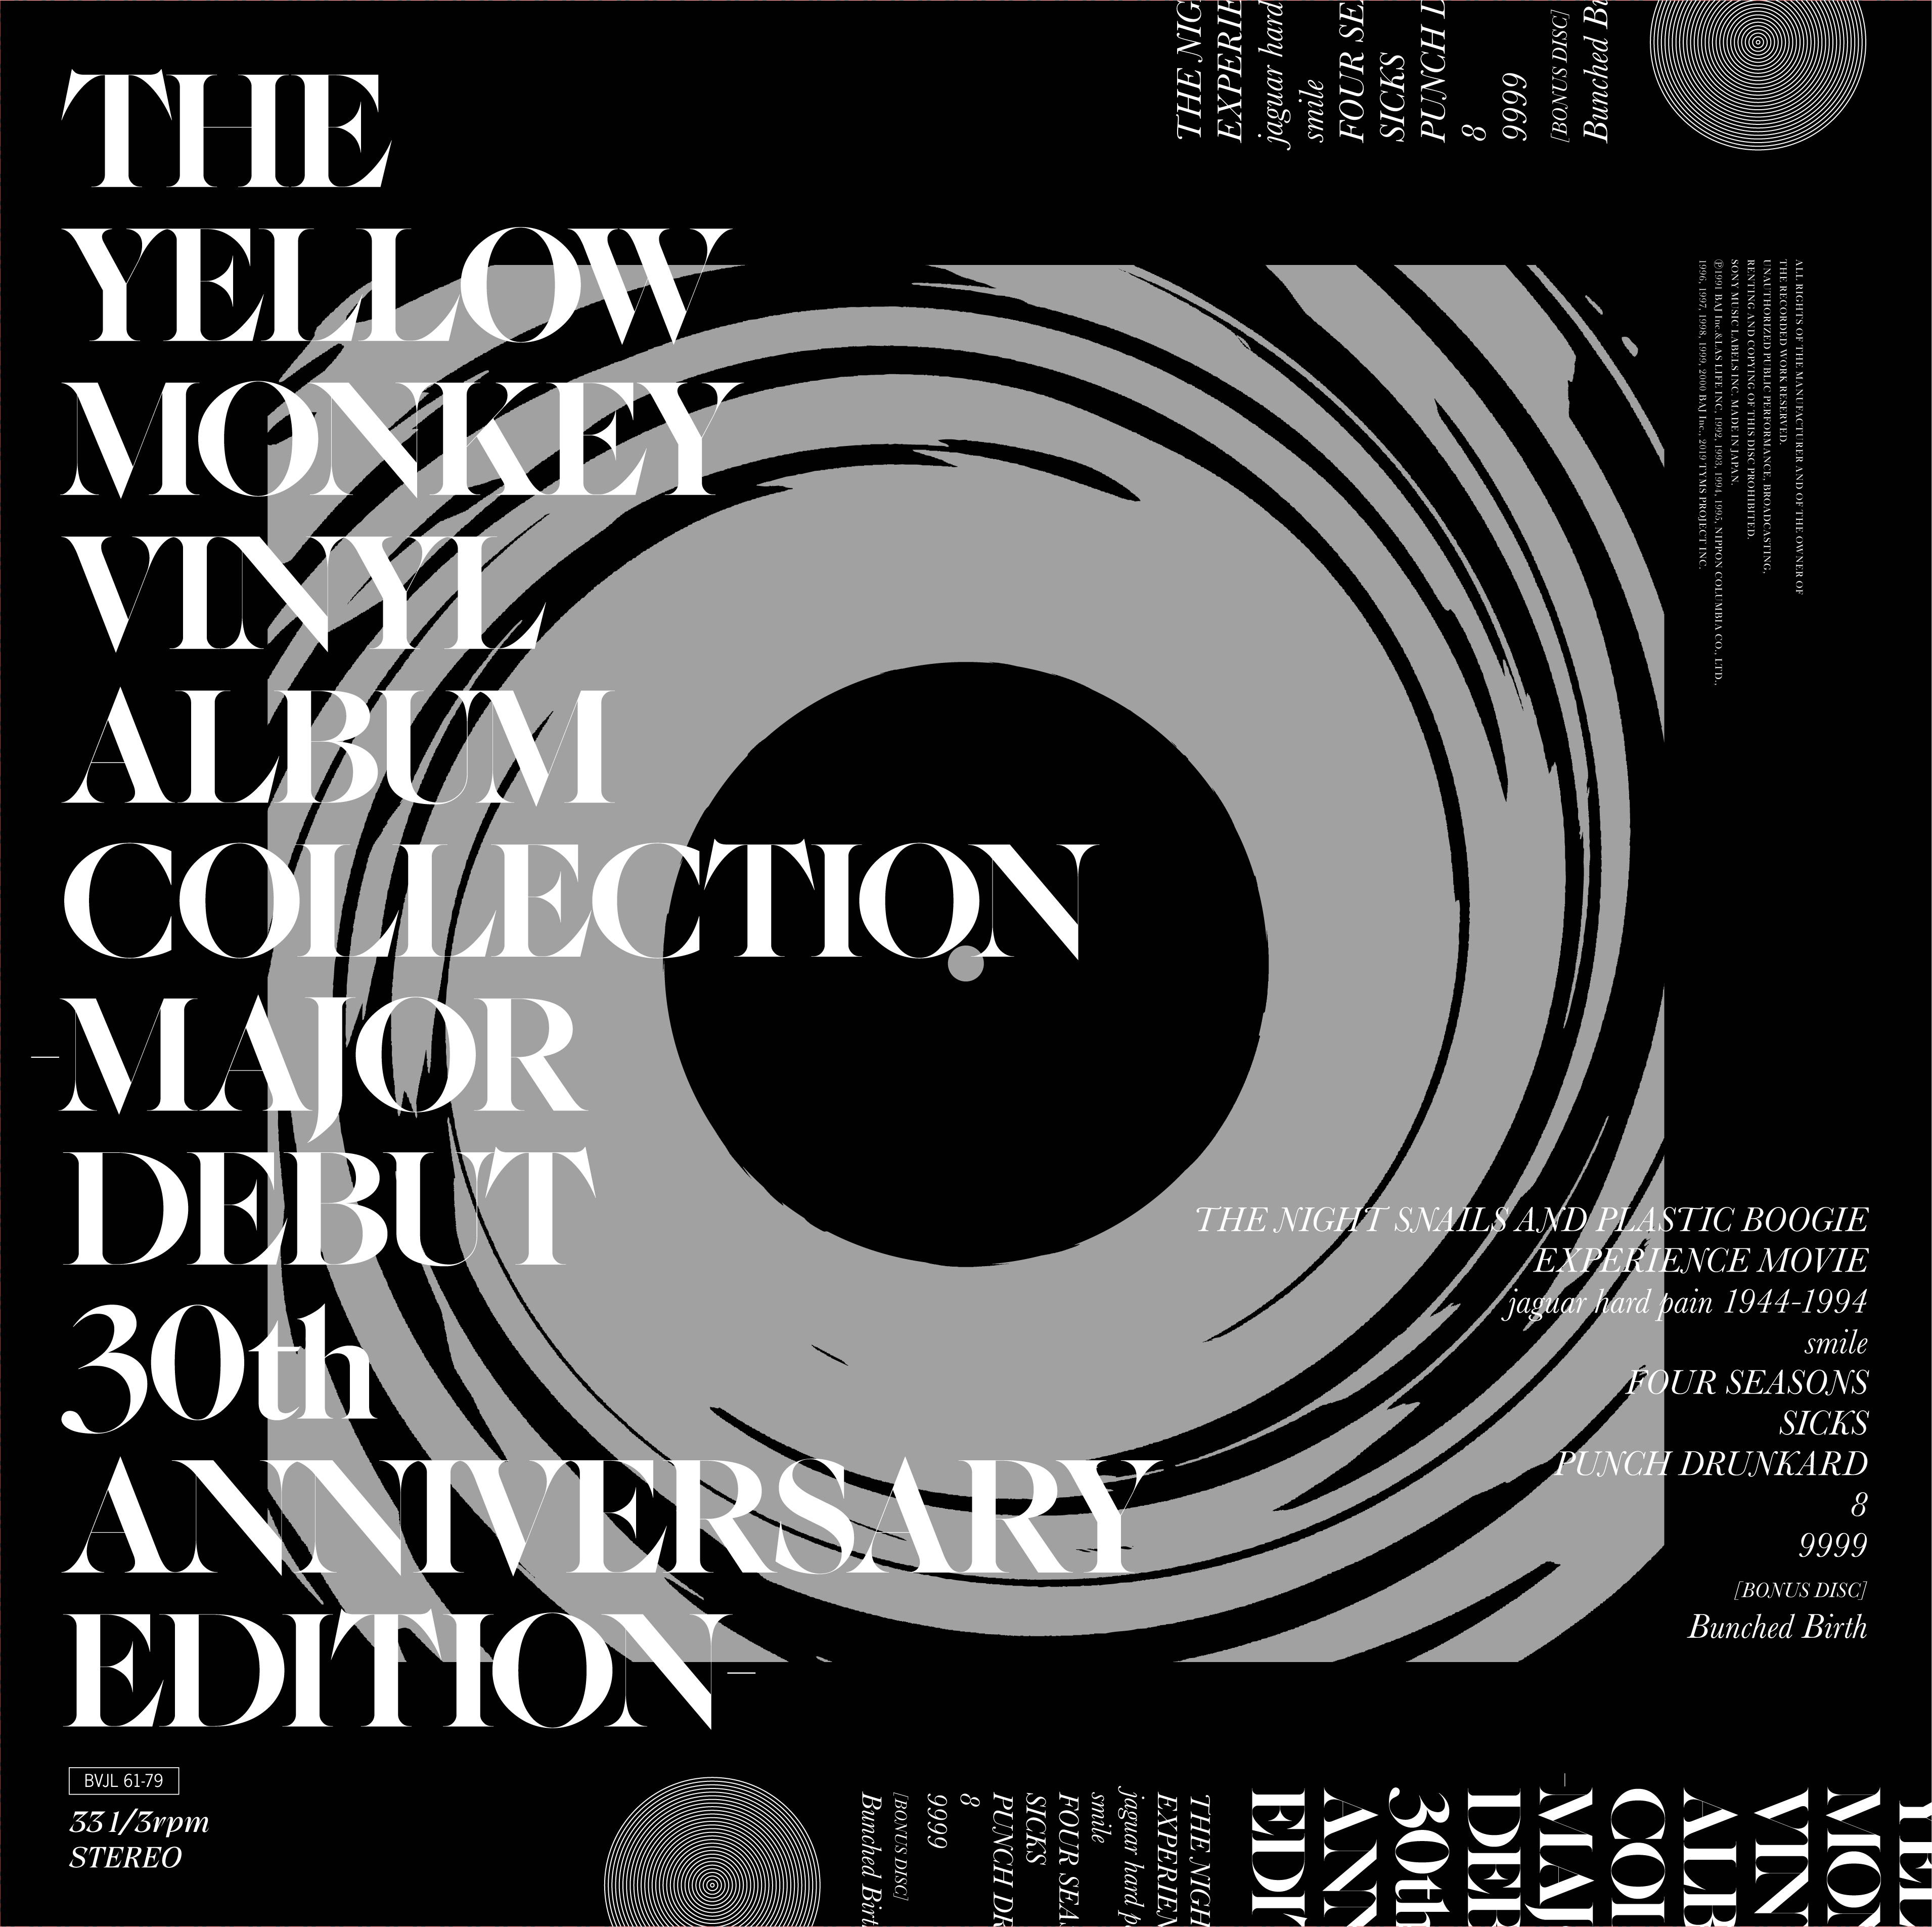 THE YELLOW MONKEY VINYL ALBUM COLLECTION -MAJOR DEBUT 30th ANNIVERSARY EDITION-